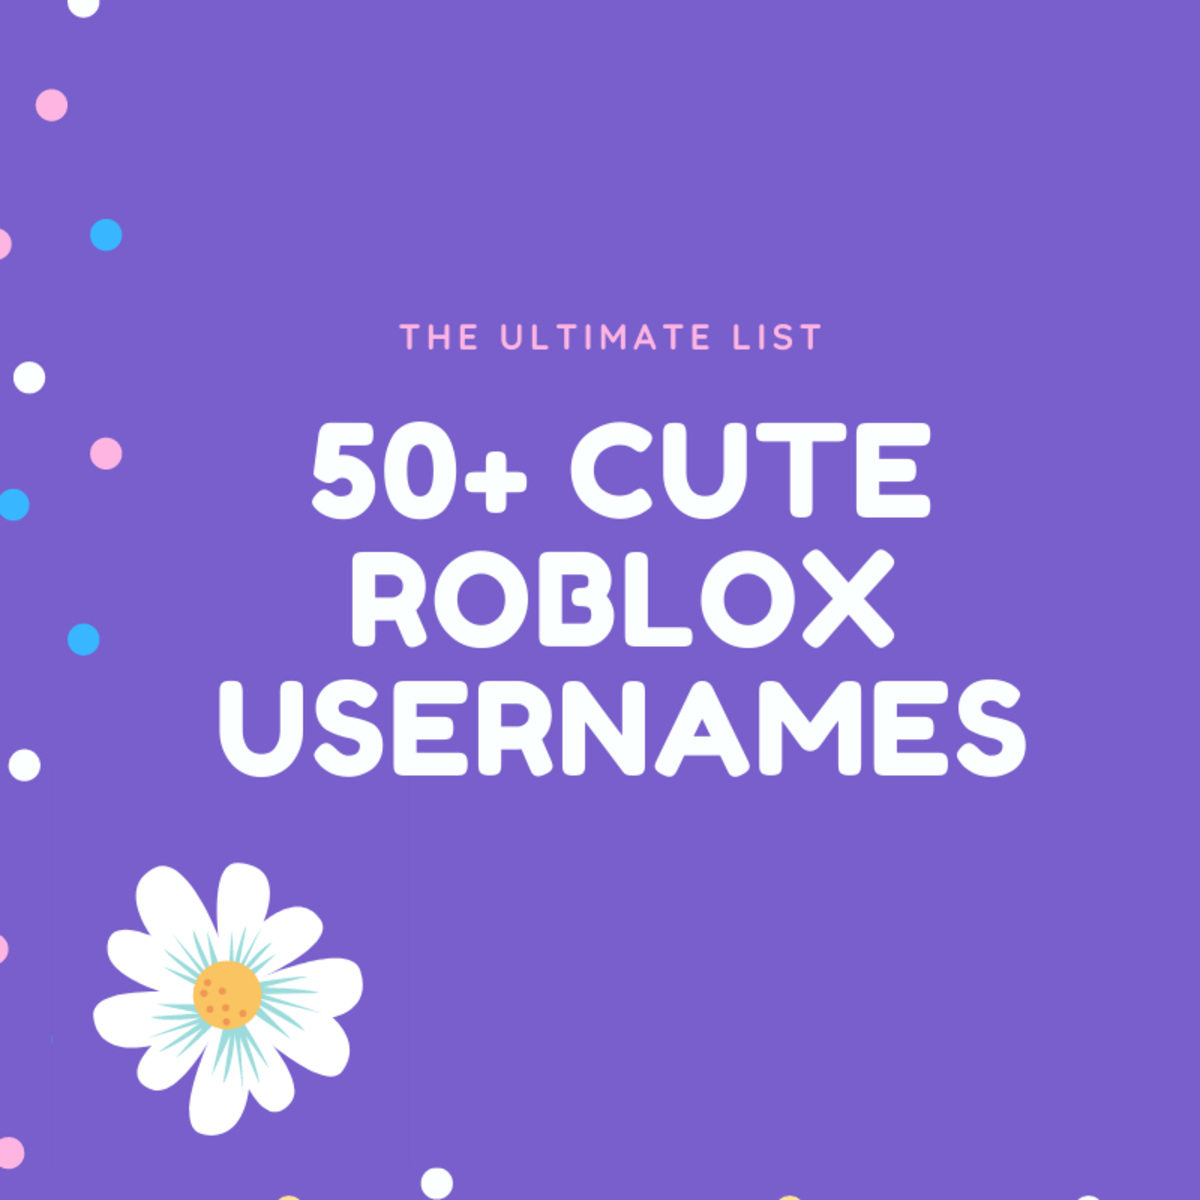 50+ Cute Roblox Usernames: The Ultimate List